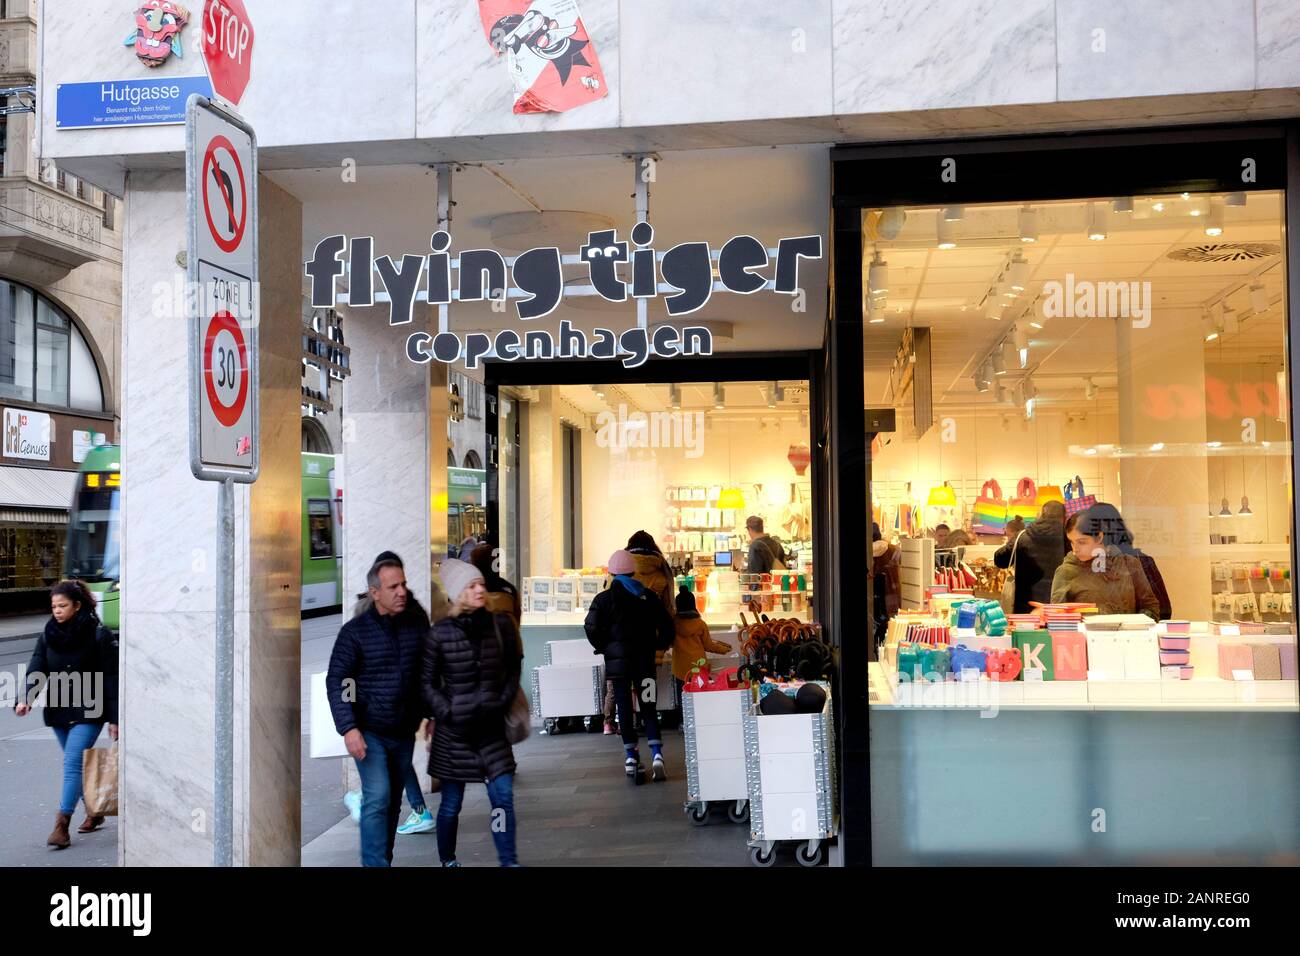 A view of flying tiger Copenhagen shop in Basel, Switzerland. Stock Photo